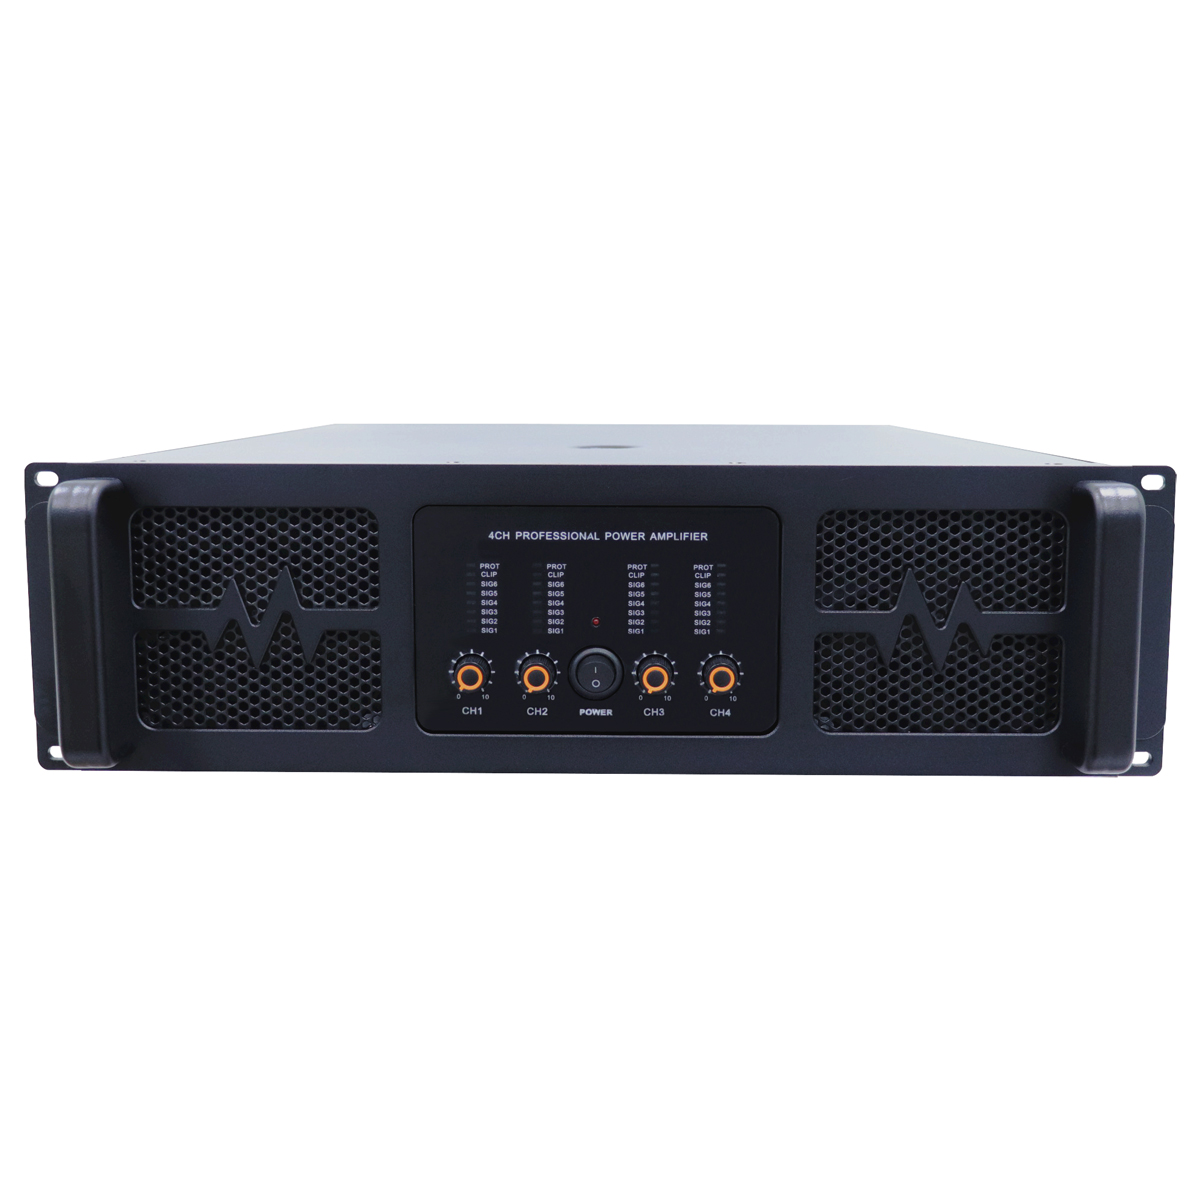 Newly developed H-class 1500W 4-channel 3U professional amplifier, SY-41500